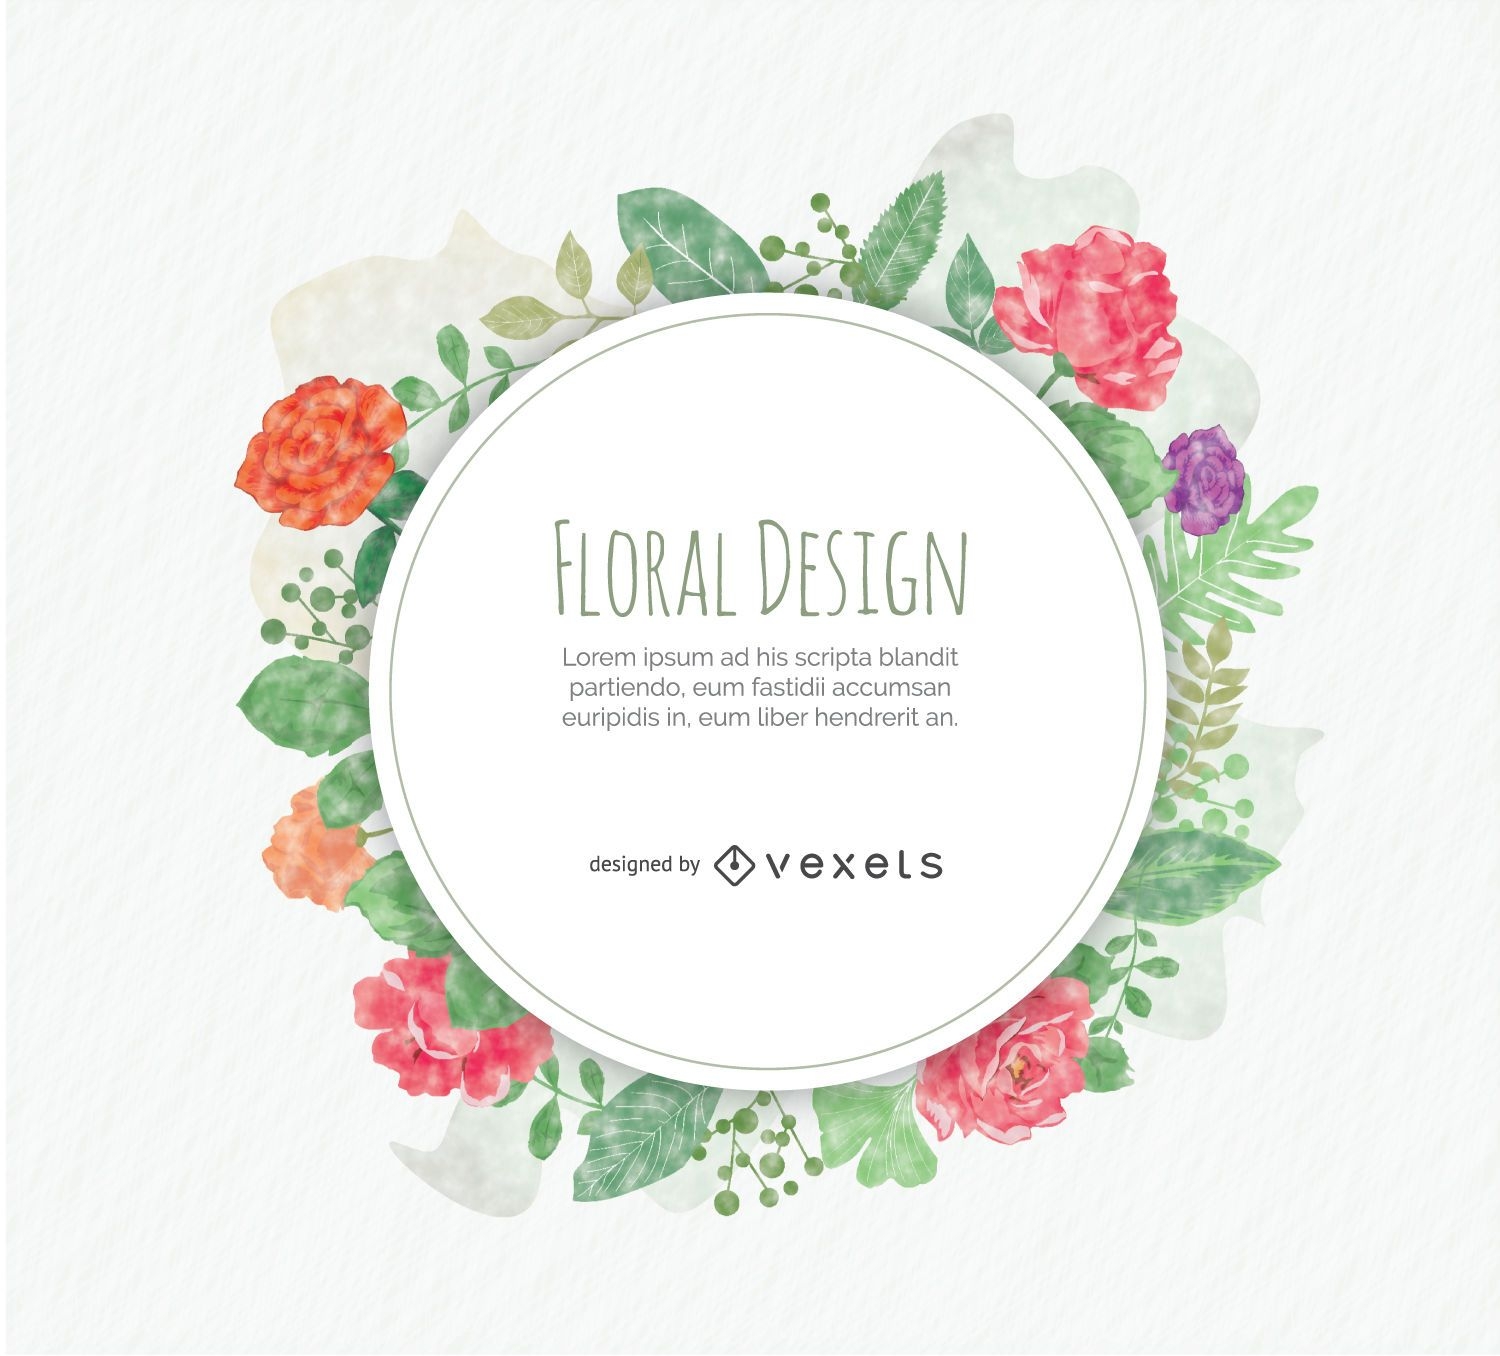 Design floral arredondado